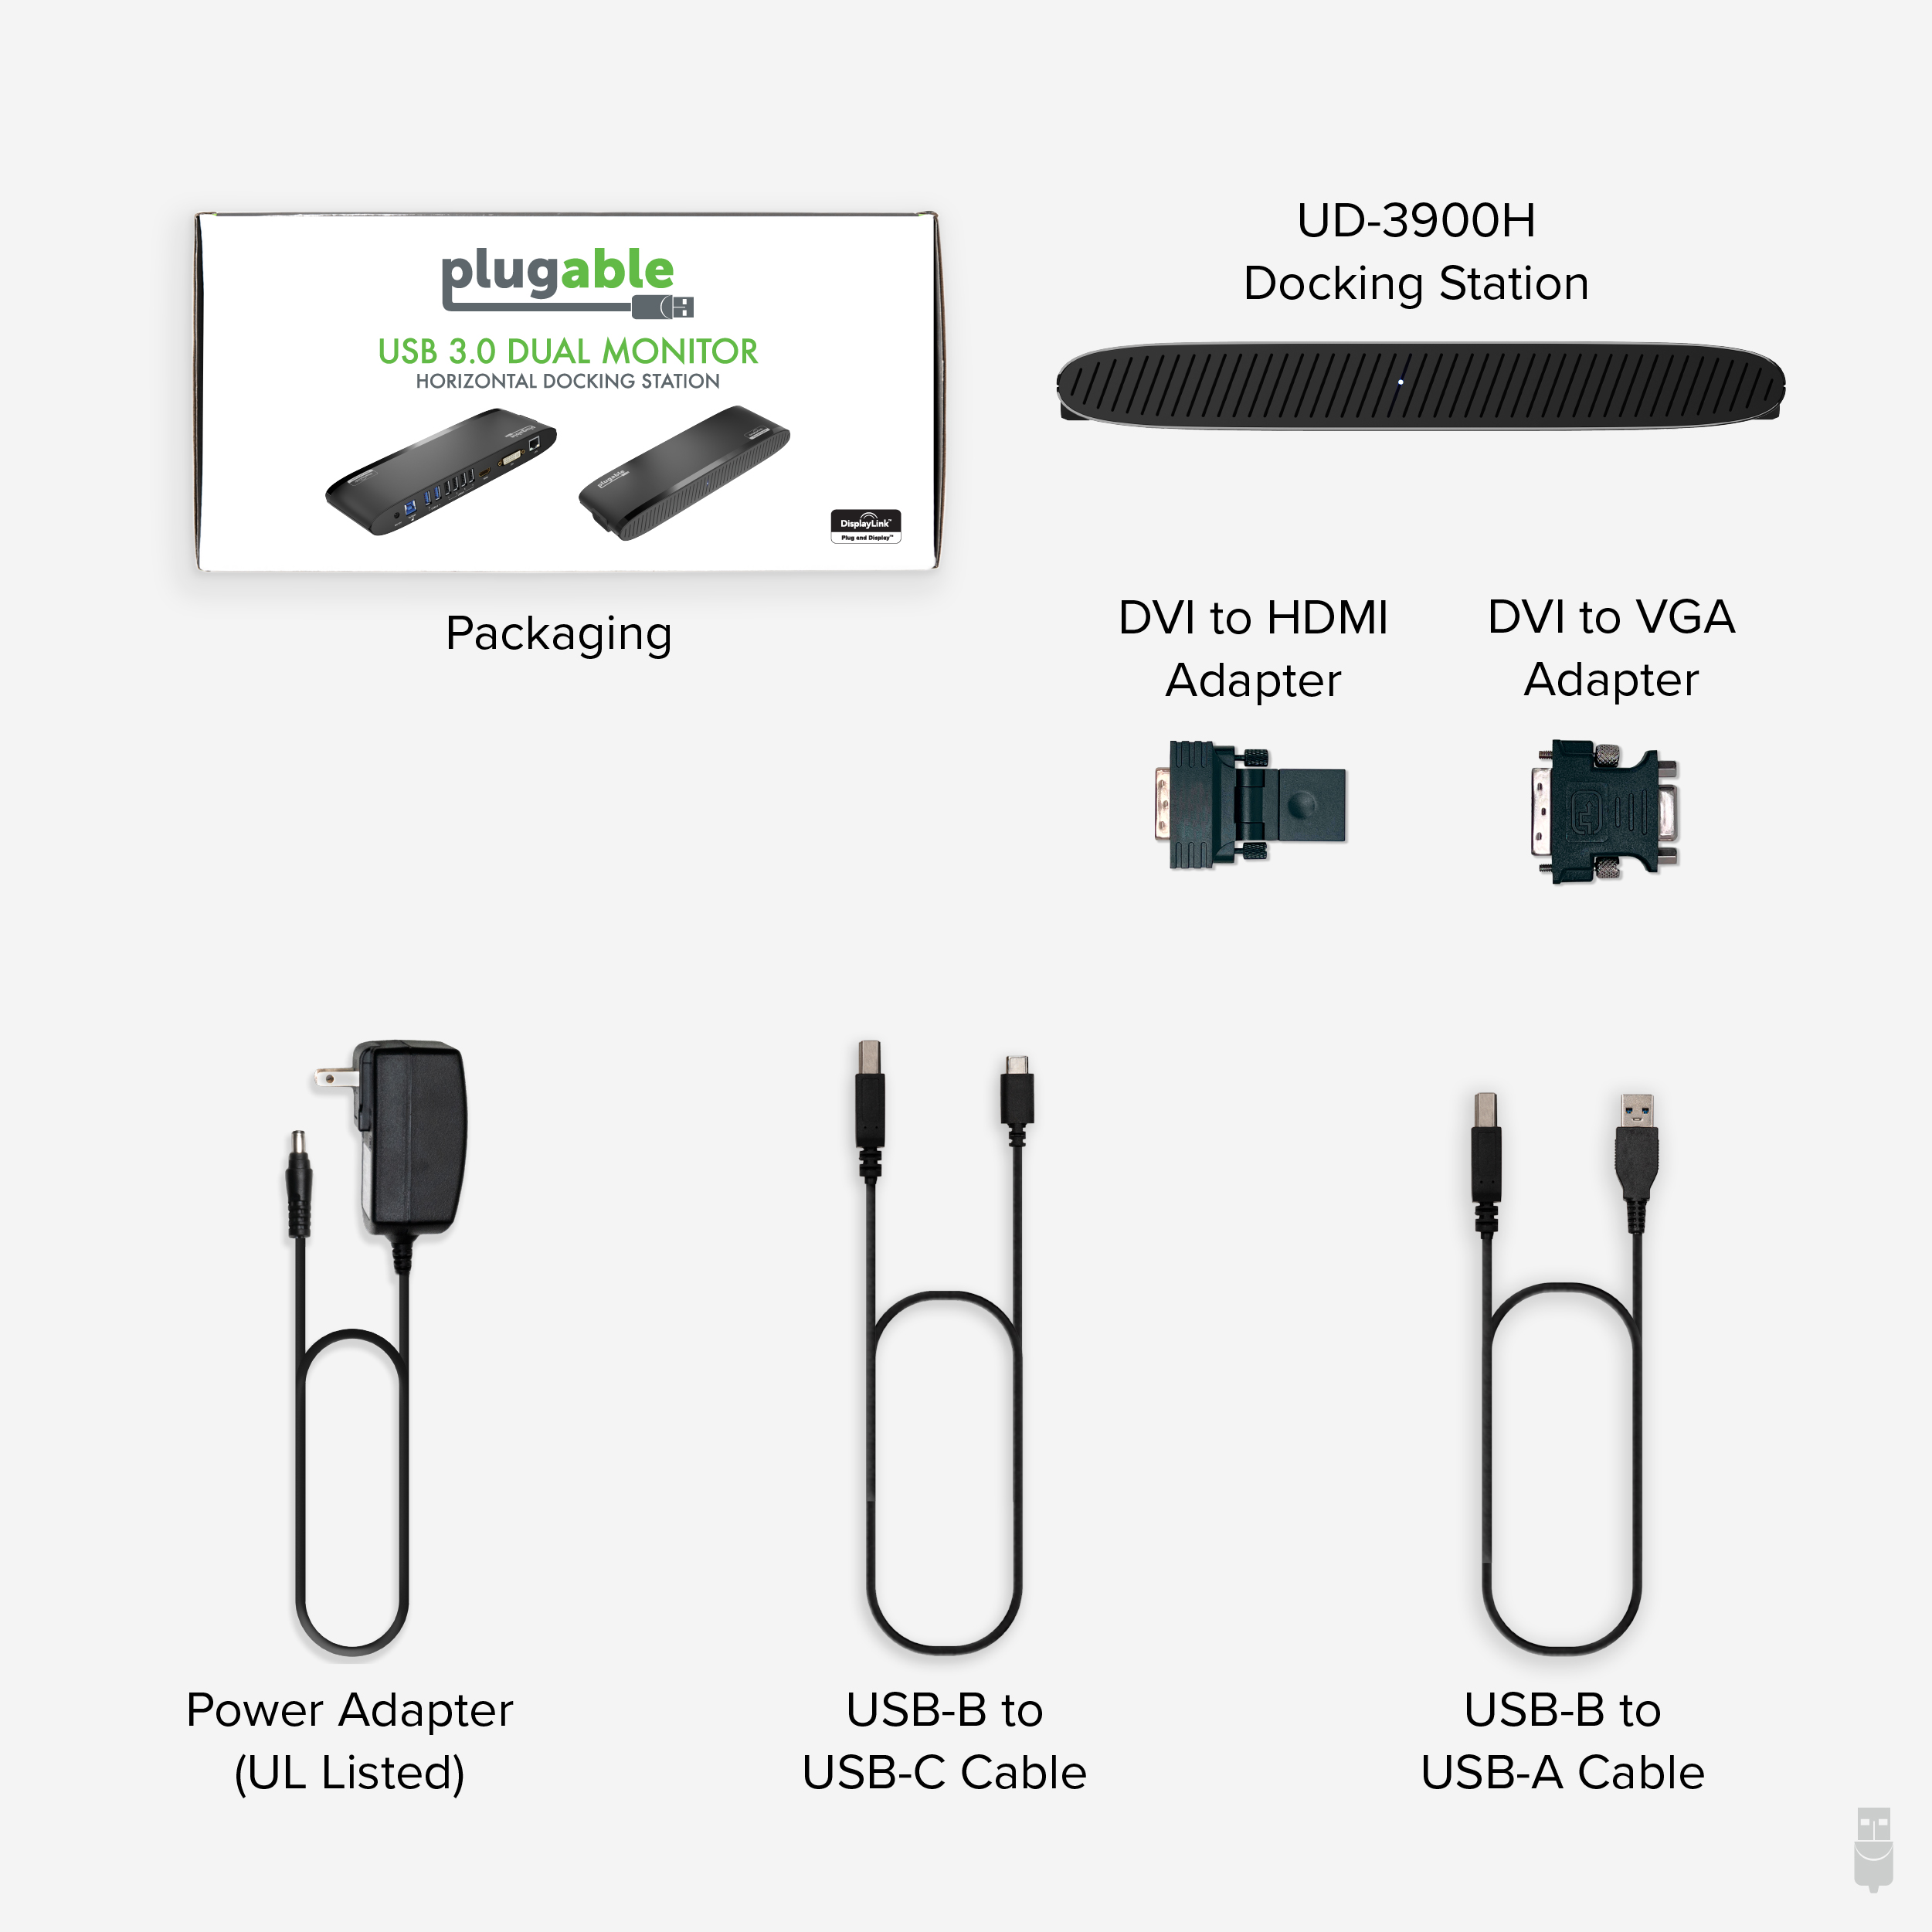 Plugable USB 3.0 Universal Laptop Docking Station for Windows and Mac (Dual Monitor: HDMI and DVI/HDMI/VGA, Gigabit Ethernet, Audio, 6 USB Ports) - Horizontal - image 5 of 8